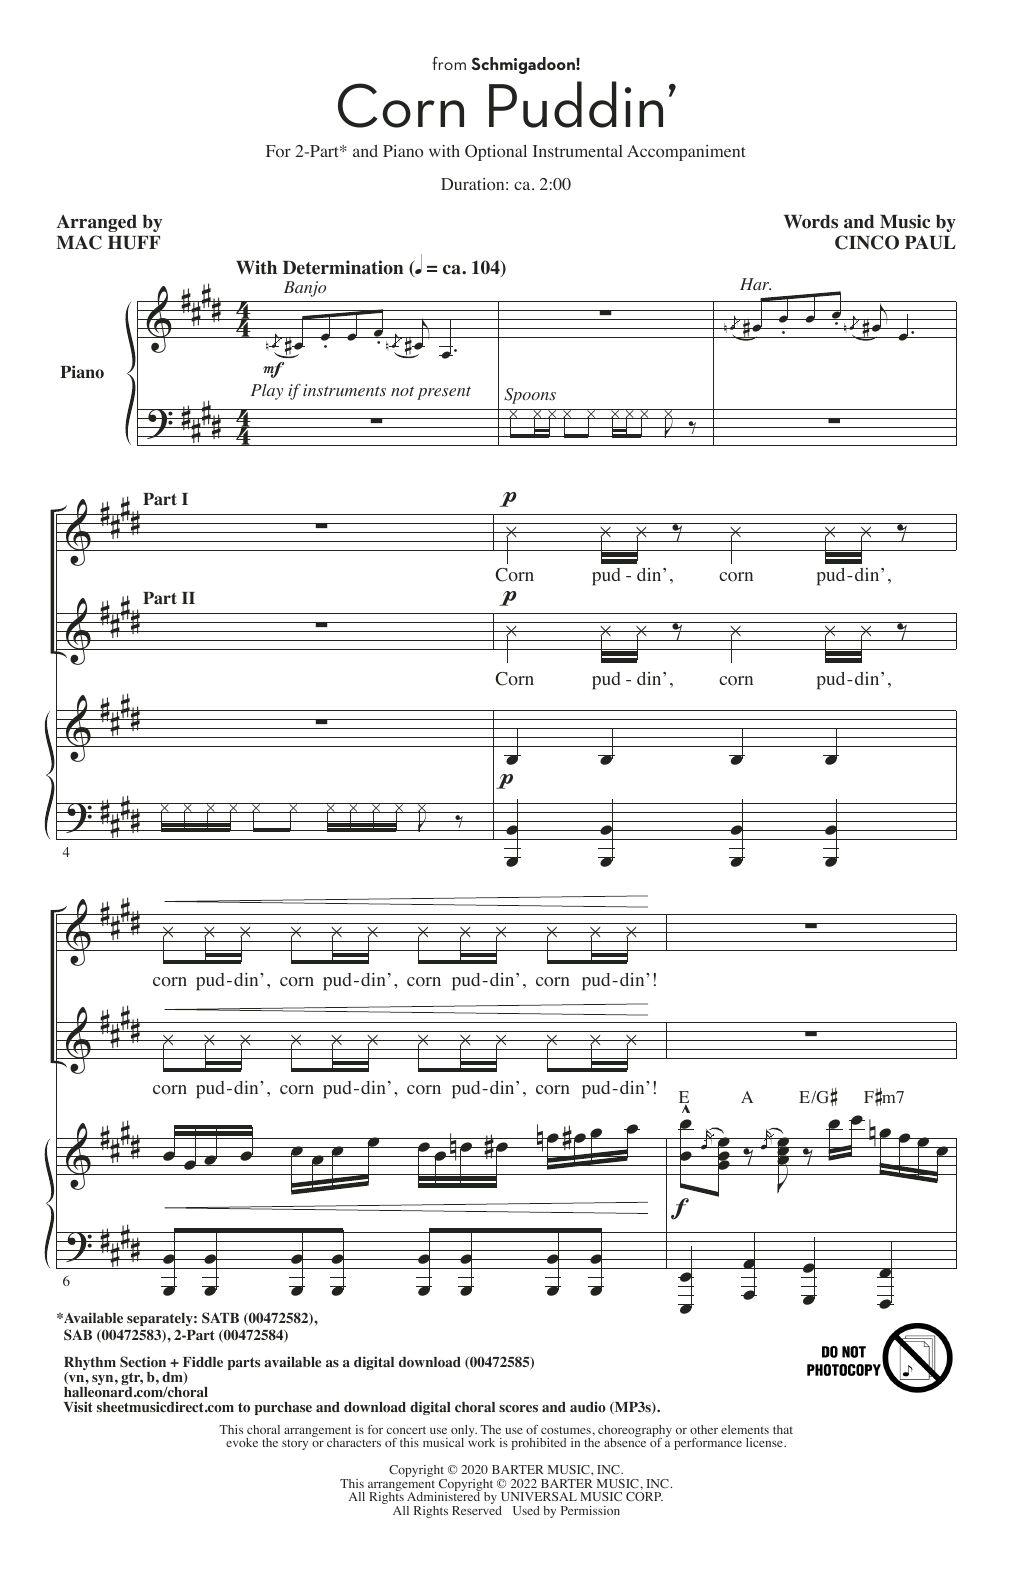 Cinco Paul Corn Puddin' (from Schmigadoon!) (arr. Mac Huff) sheet music notes and chords arranged for 2-Part Choir